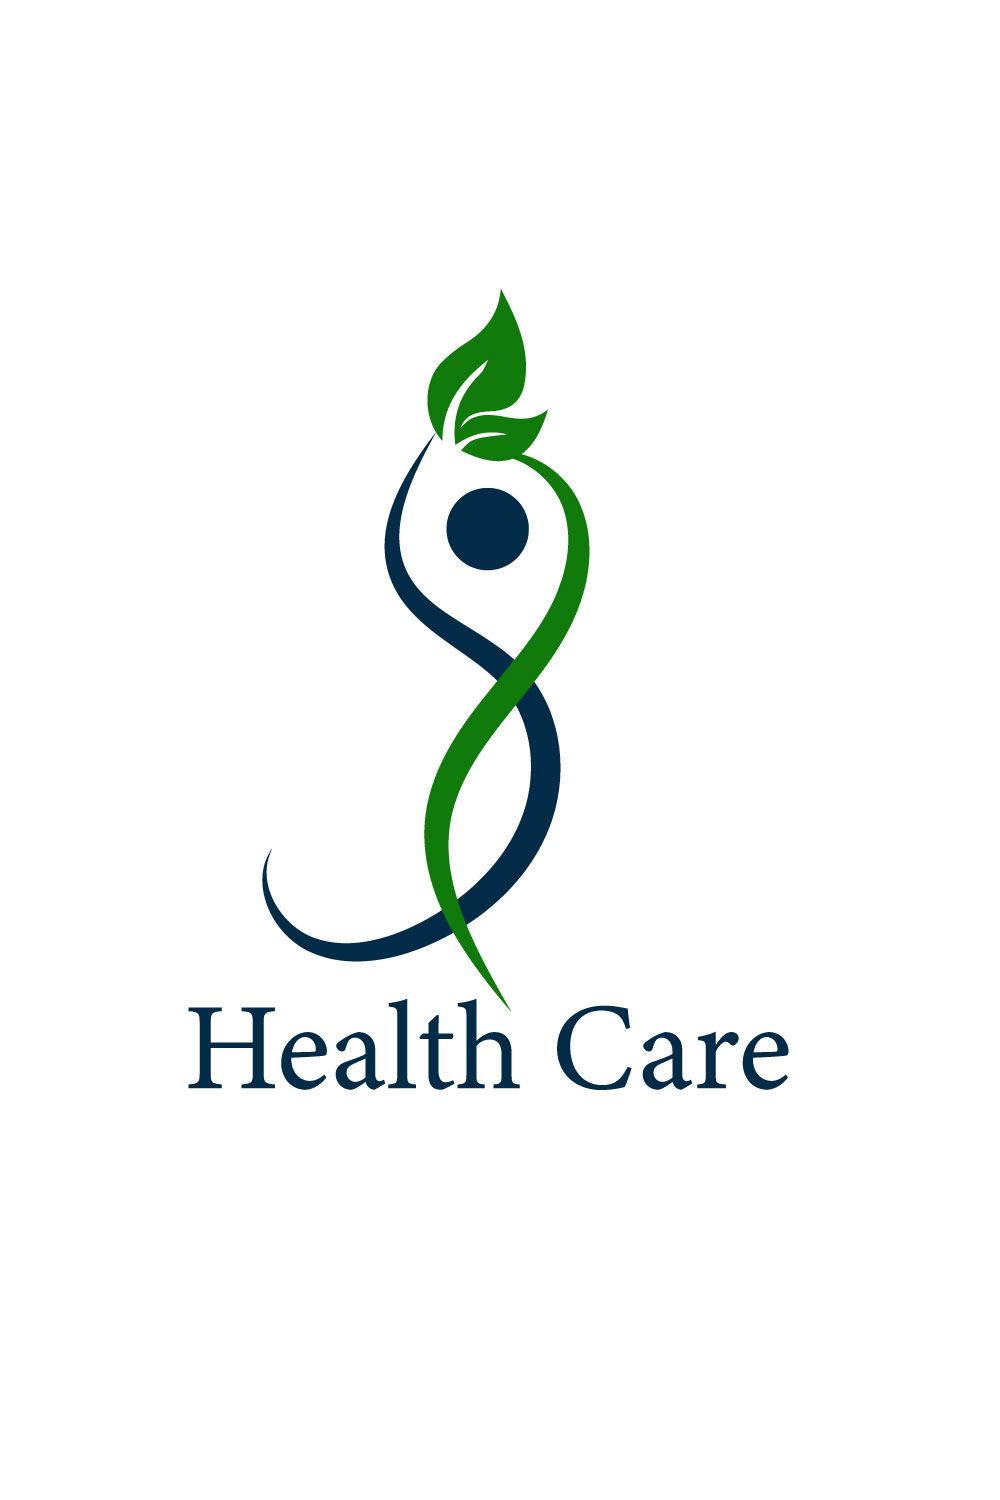 Free Mind Health Logo pinterest preview image.